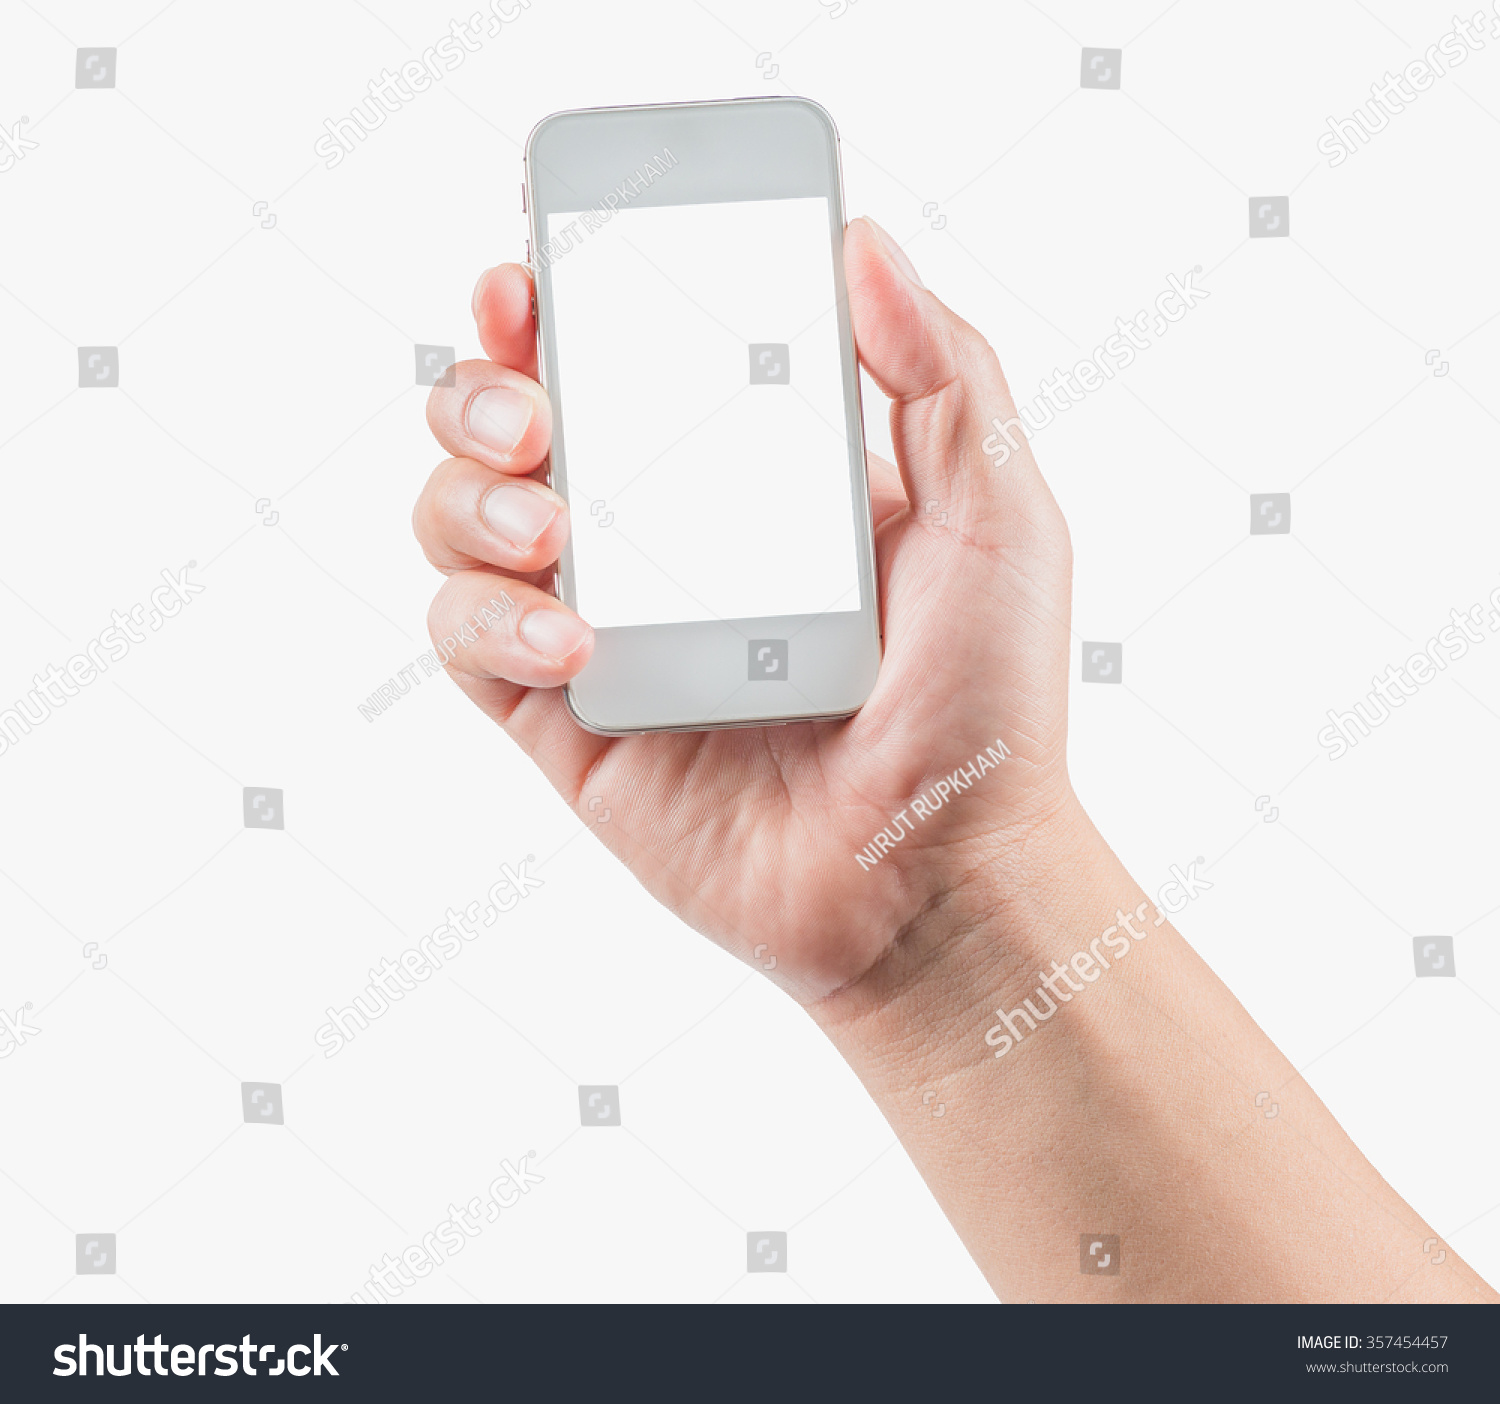 Hand holding smart phone on white background #357454457